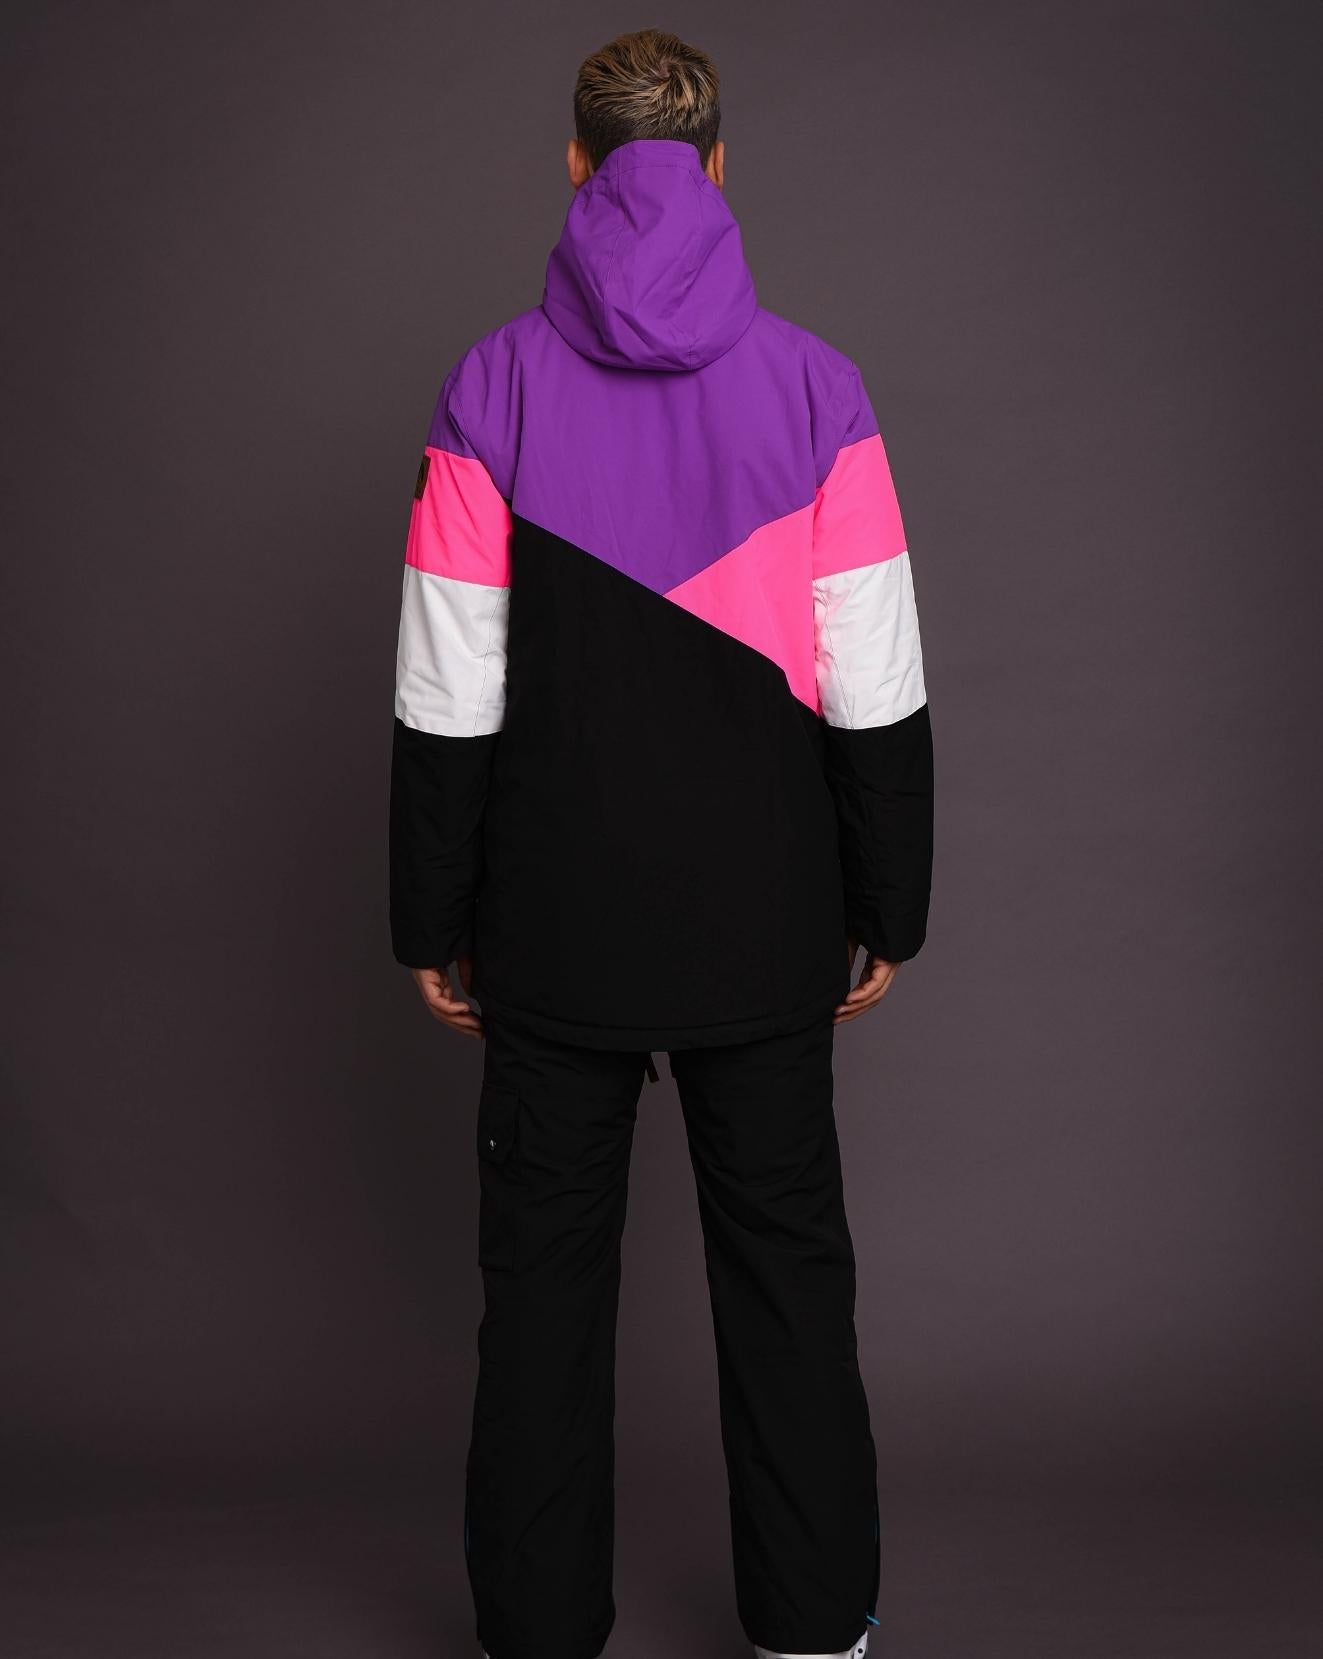 Mens Ski Jacket | Multicoloured (Purple, Black, Green) - OOSC Clothing